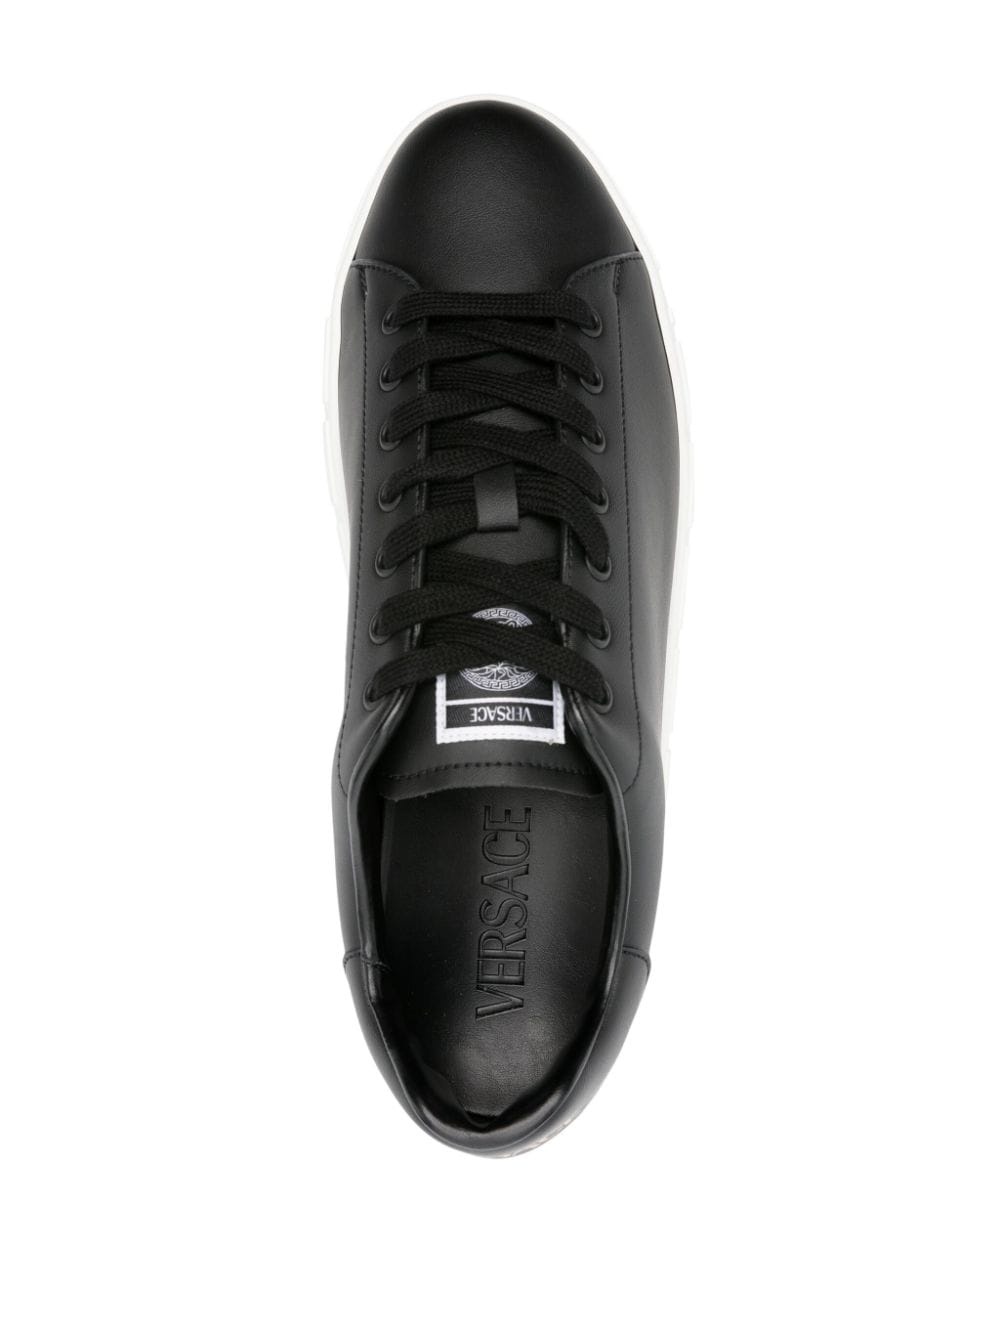 Greca leather sneakers - 4